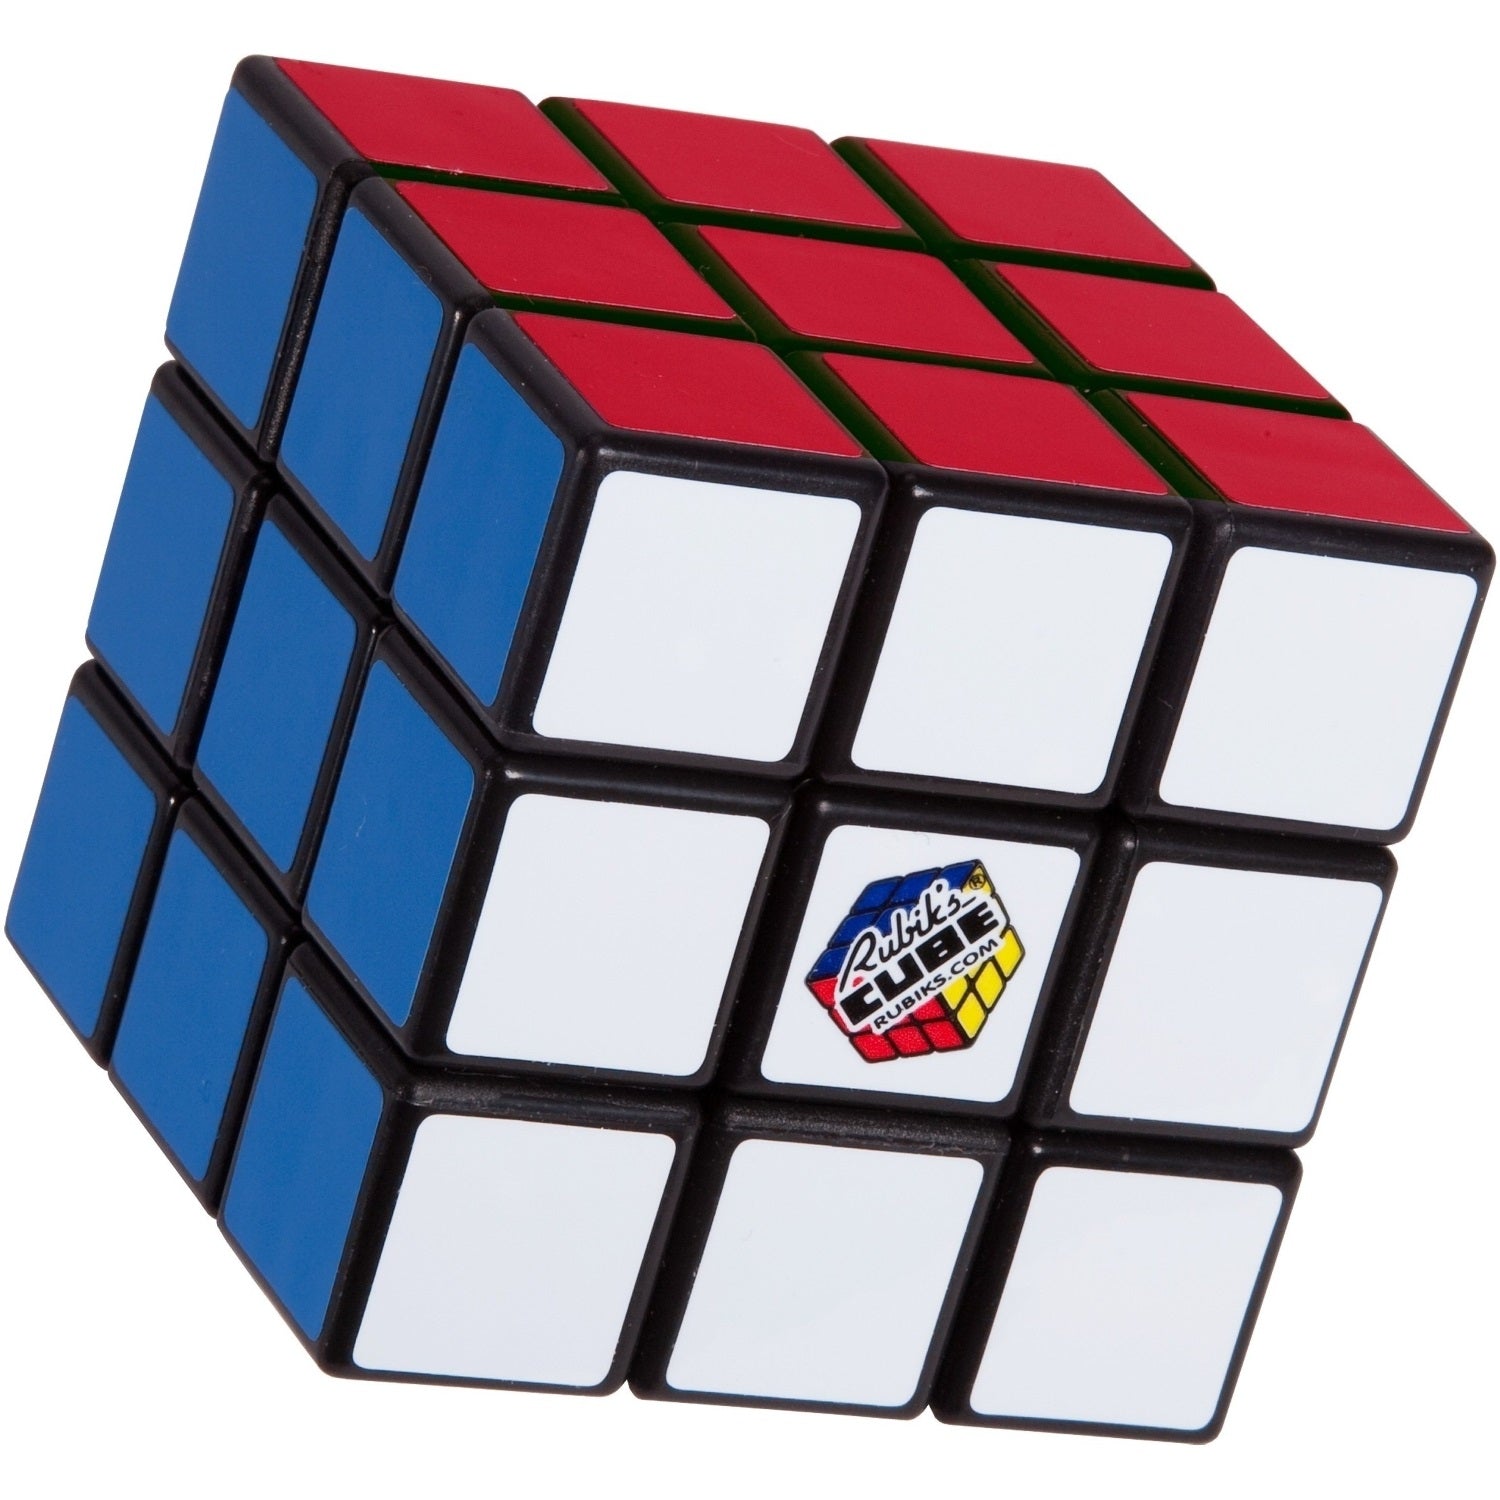 Rubiks – Games